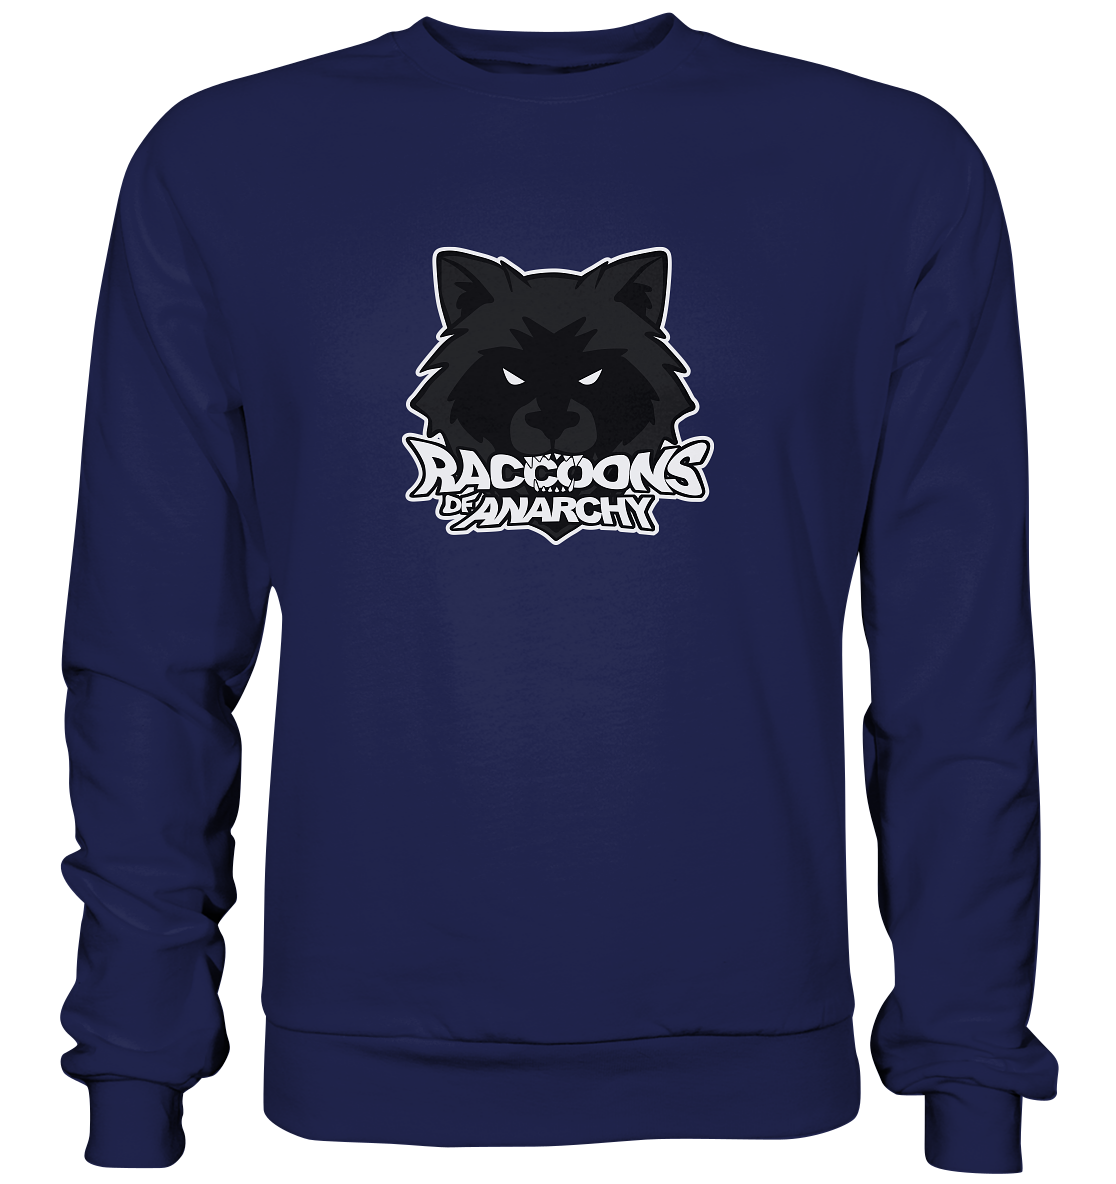 RACCOONS OF ANARCHY - Basic Sweatshirt